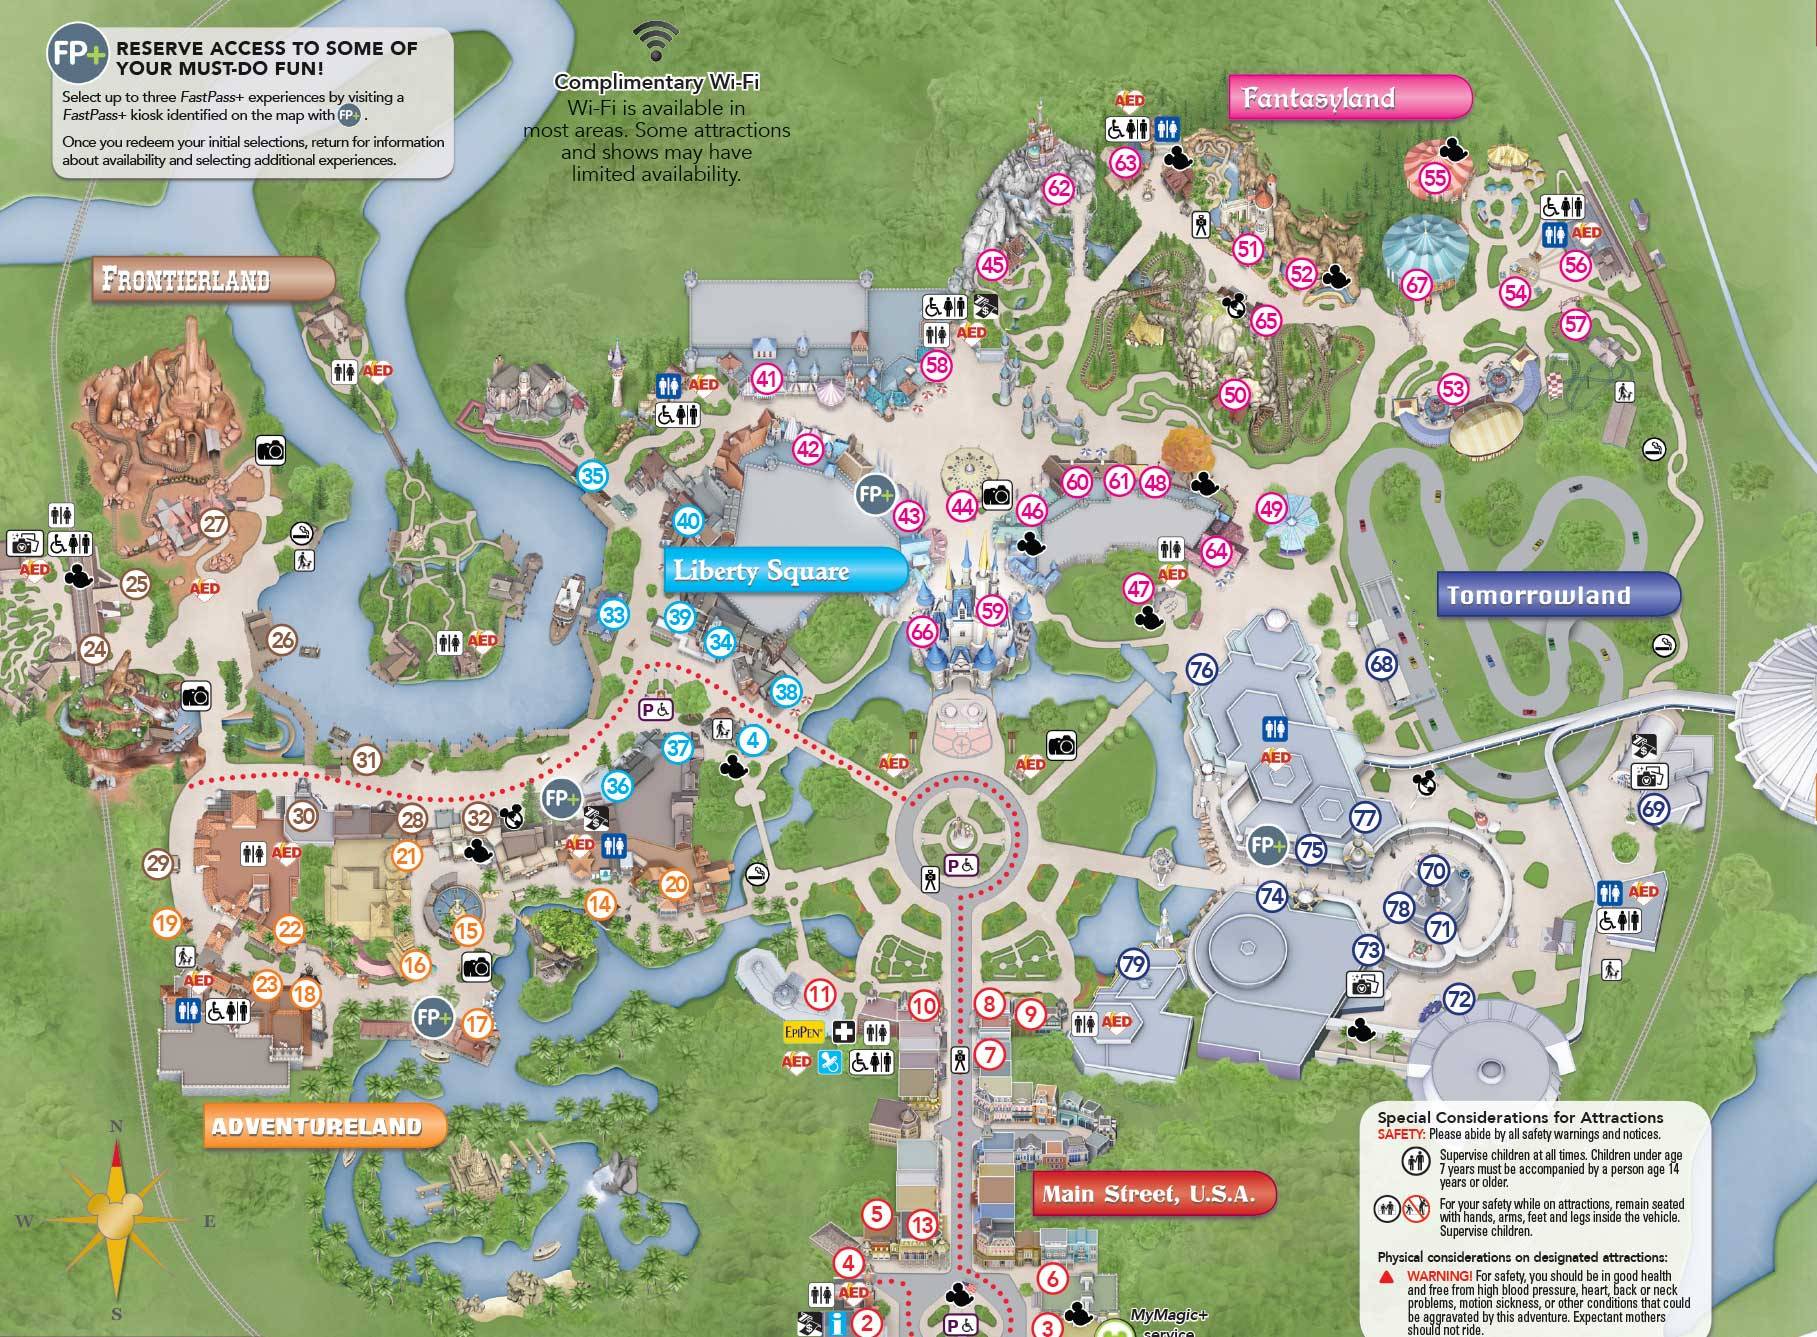 New Magic Kingdom guide map shows new Plaza Gardens